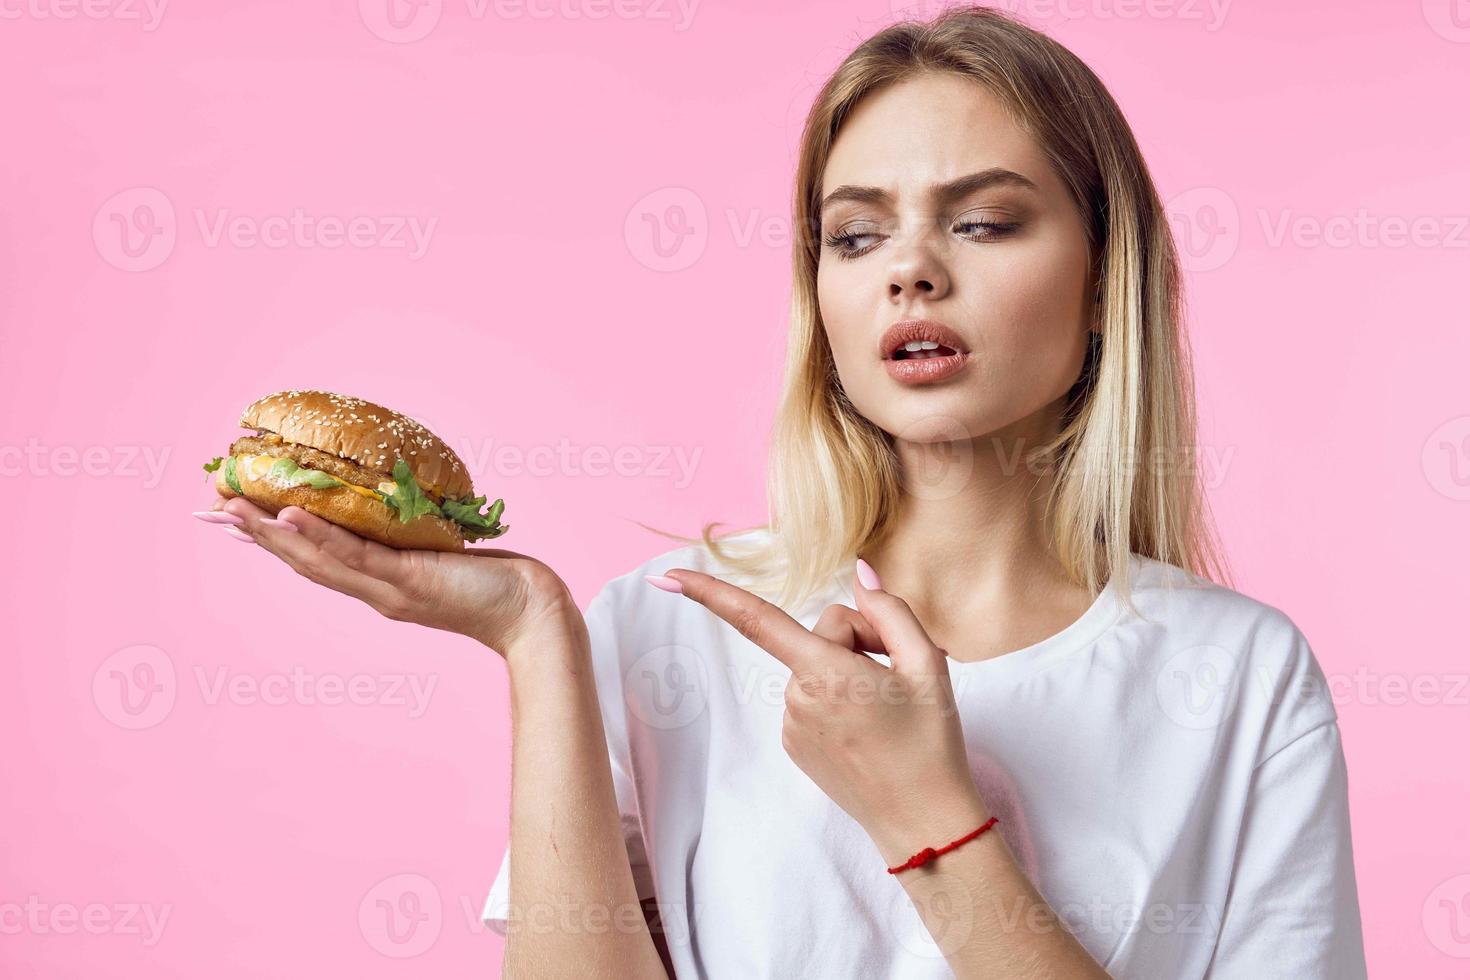 mulher dentro branco camiseta Hamburger lanche delicioso Comida restaurante foto